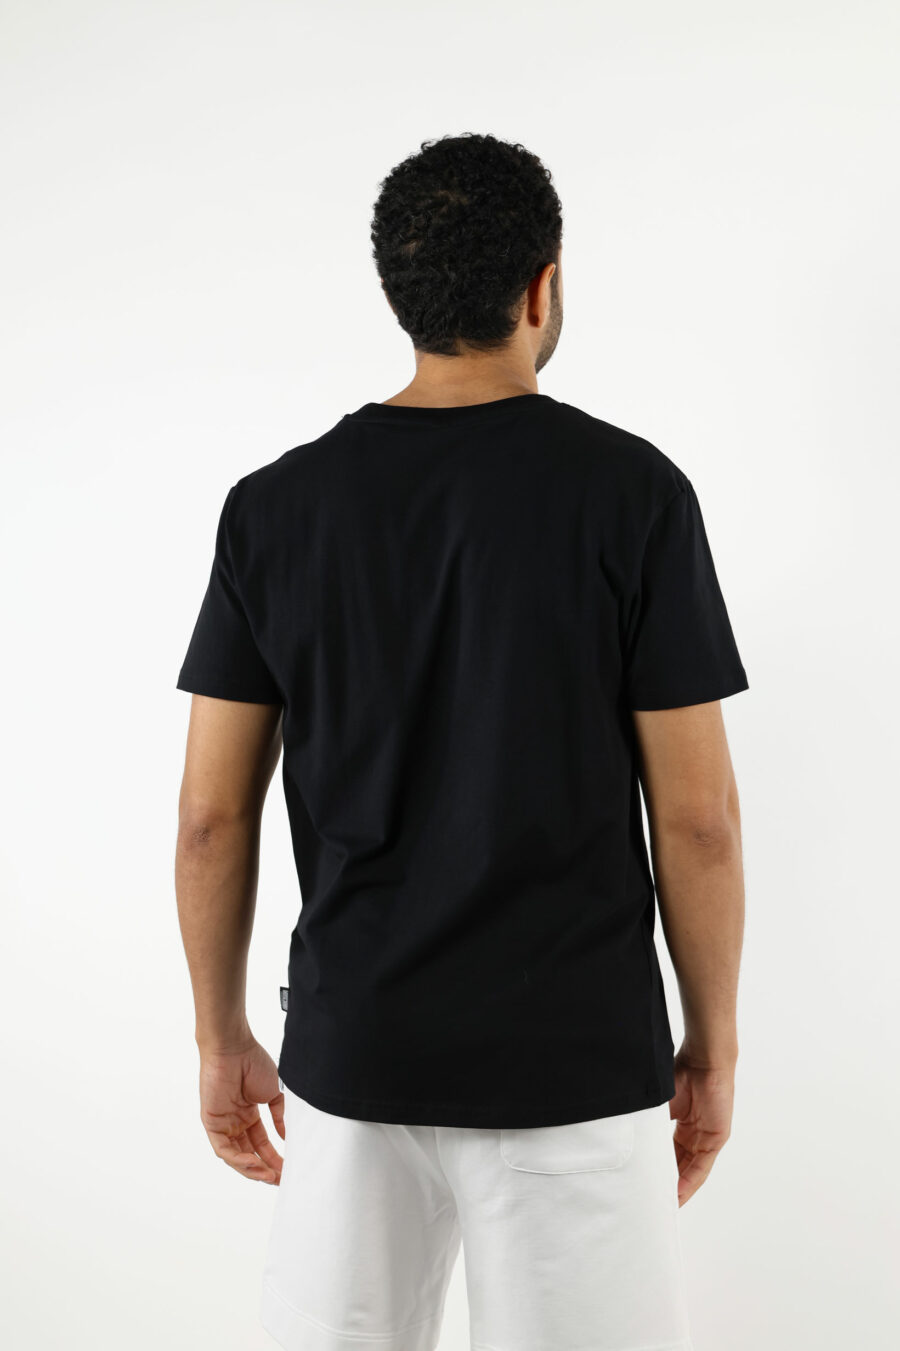 T-shirt black with mini bear "underbear" in white rubber - 111016